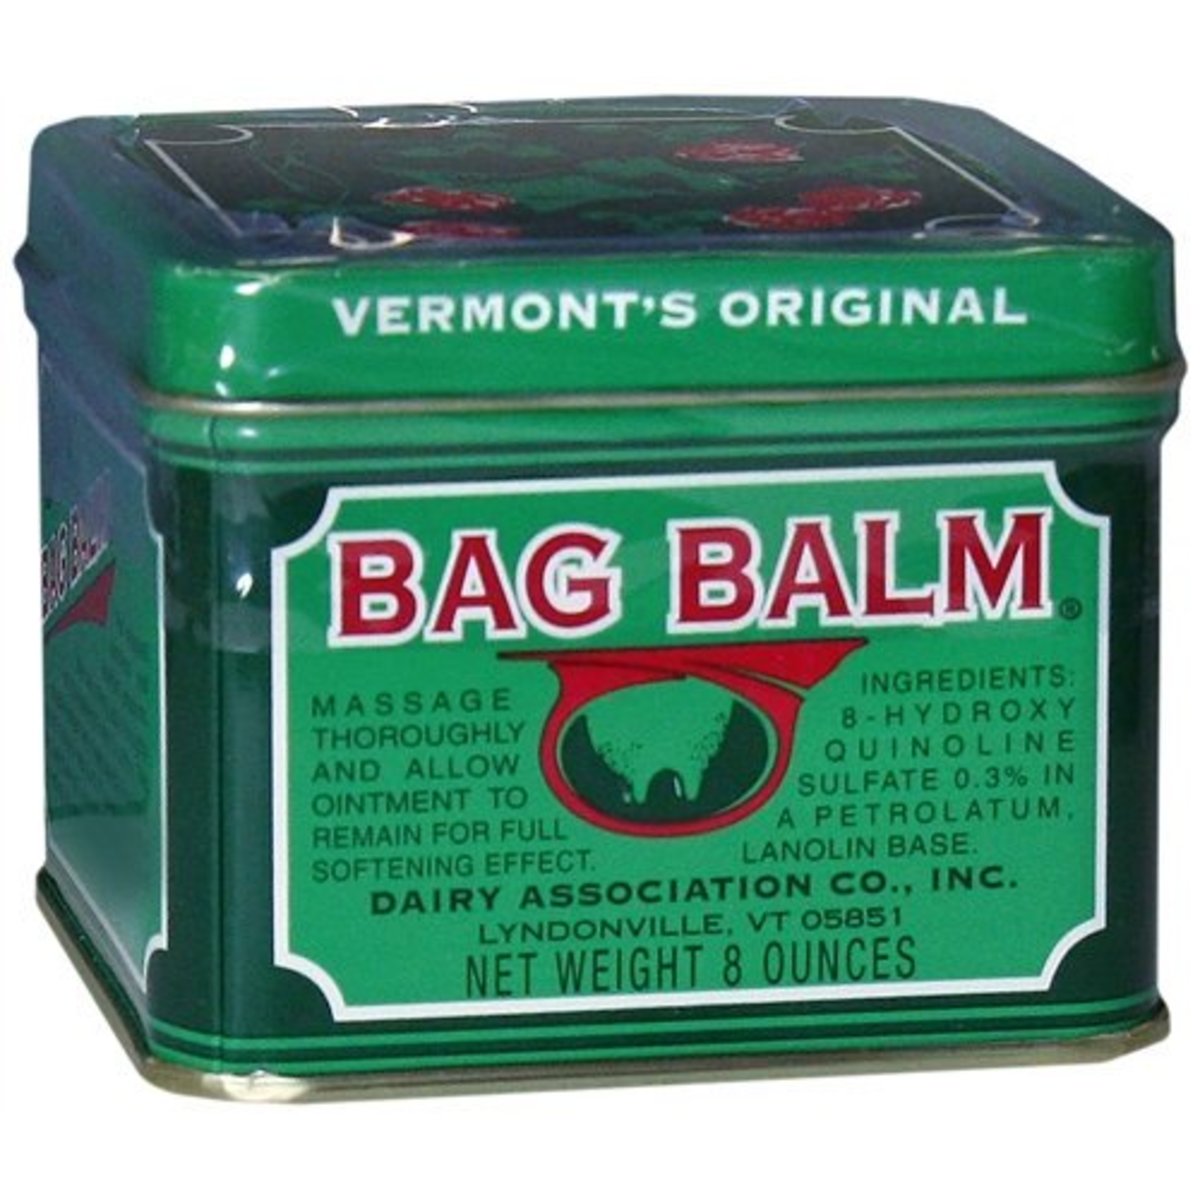 Bag Balm: The miracle rash butt-kicker.